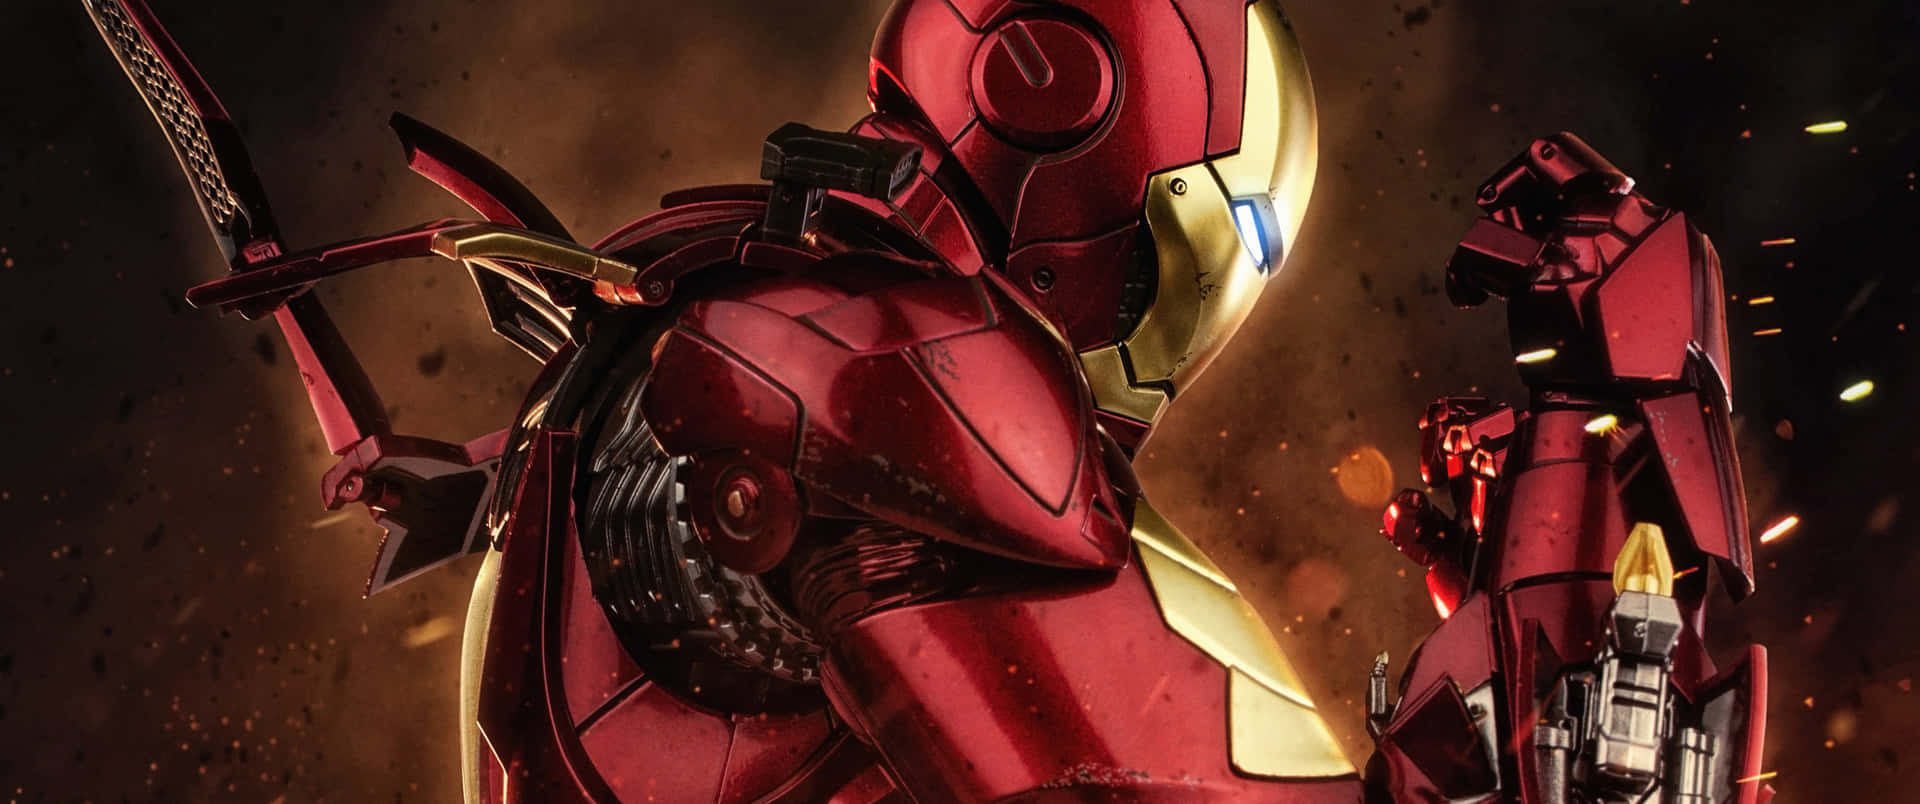 3440x1440p Iron Man Background Wallpaper